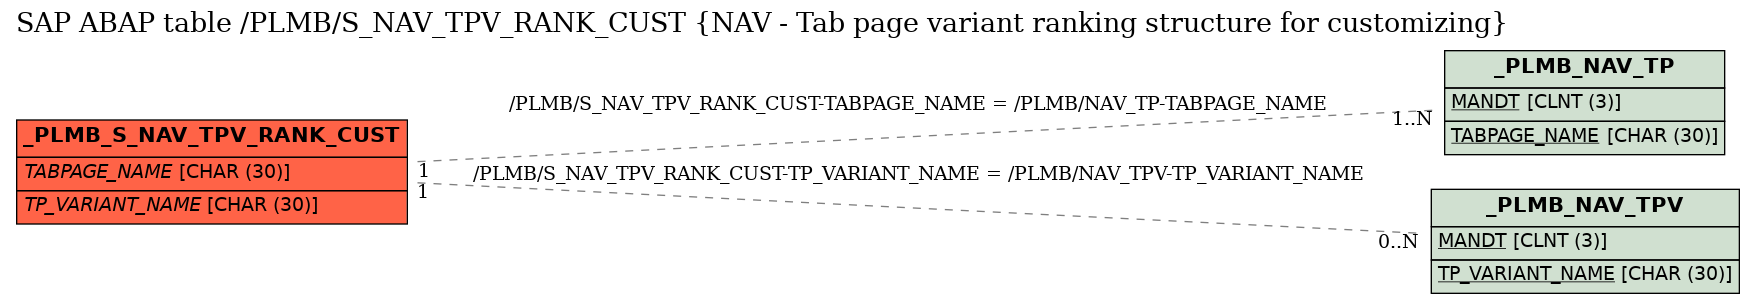 E-R Diagram for table /PLMB/S_NAV_TPV_RANK_CUST (NAV - Tab page variant ranking structure for customizing)